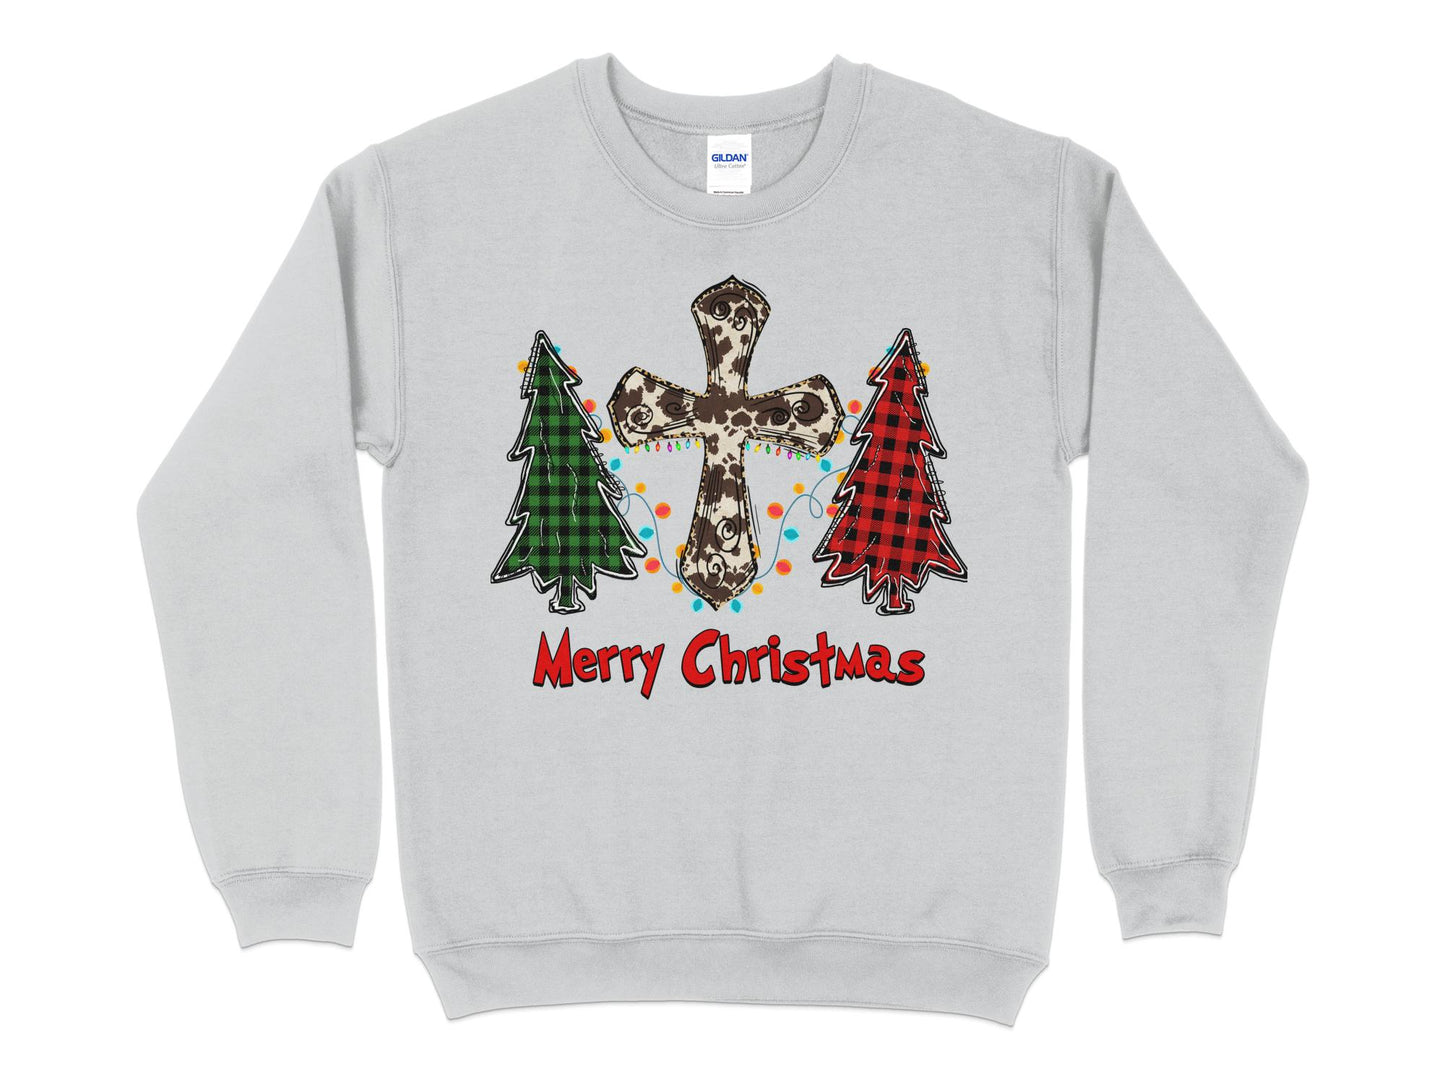 Merry Christmas Cow Print Cross Buffalo Plaid Tree Sweatshirt, Christmas Sweater, Cute Christmas Shirt, Holiday Shirt, Xmas Gifts - Mardonyx Sweatshirt S / Sport Grey